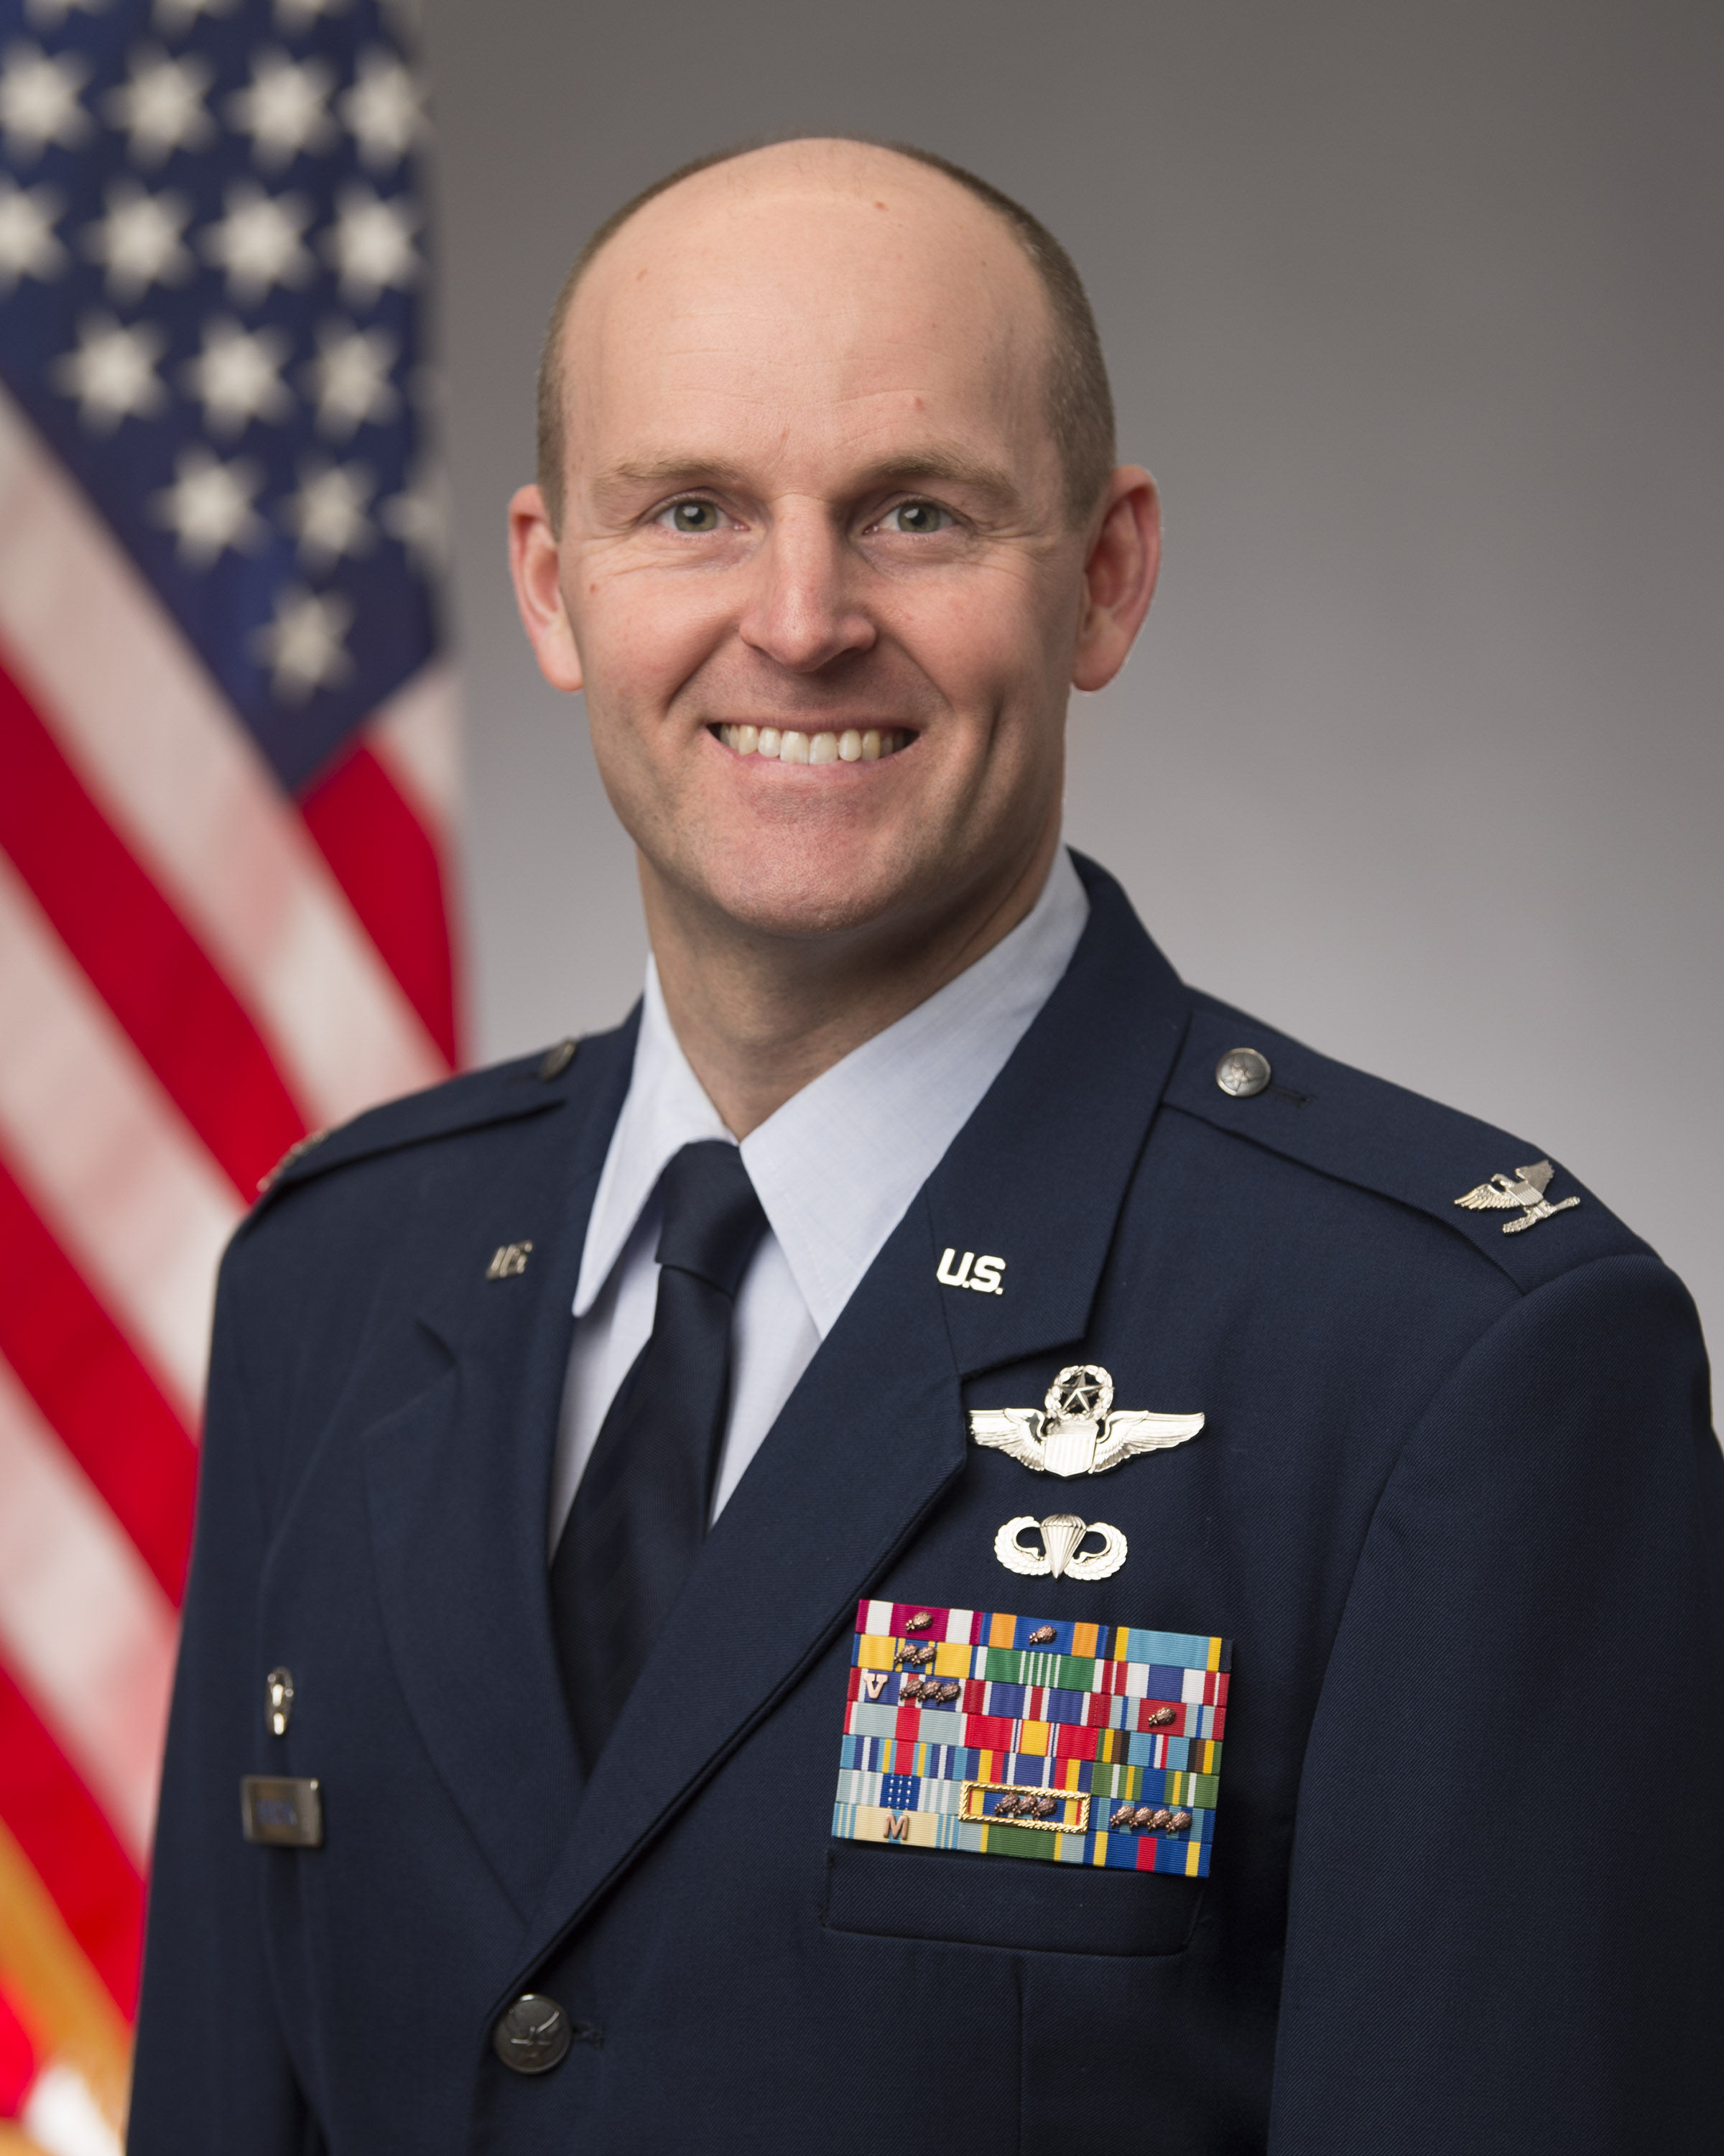 Official portrait of Col. David Shevchik